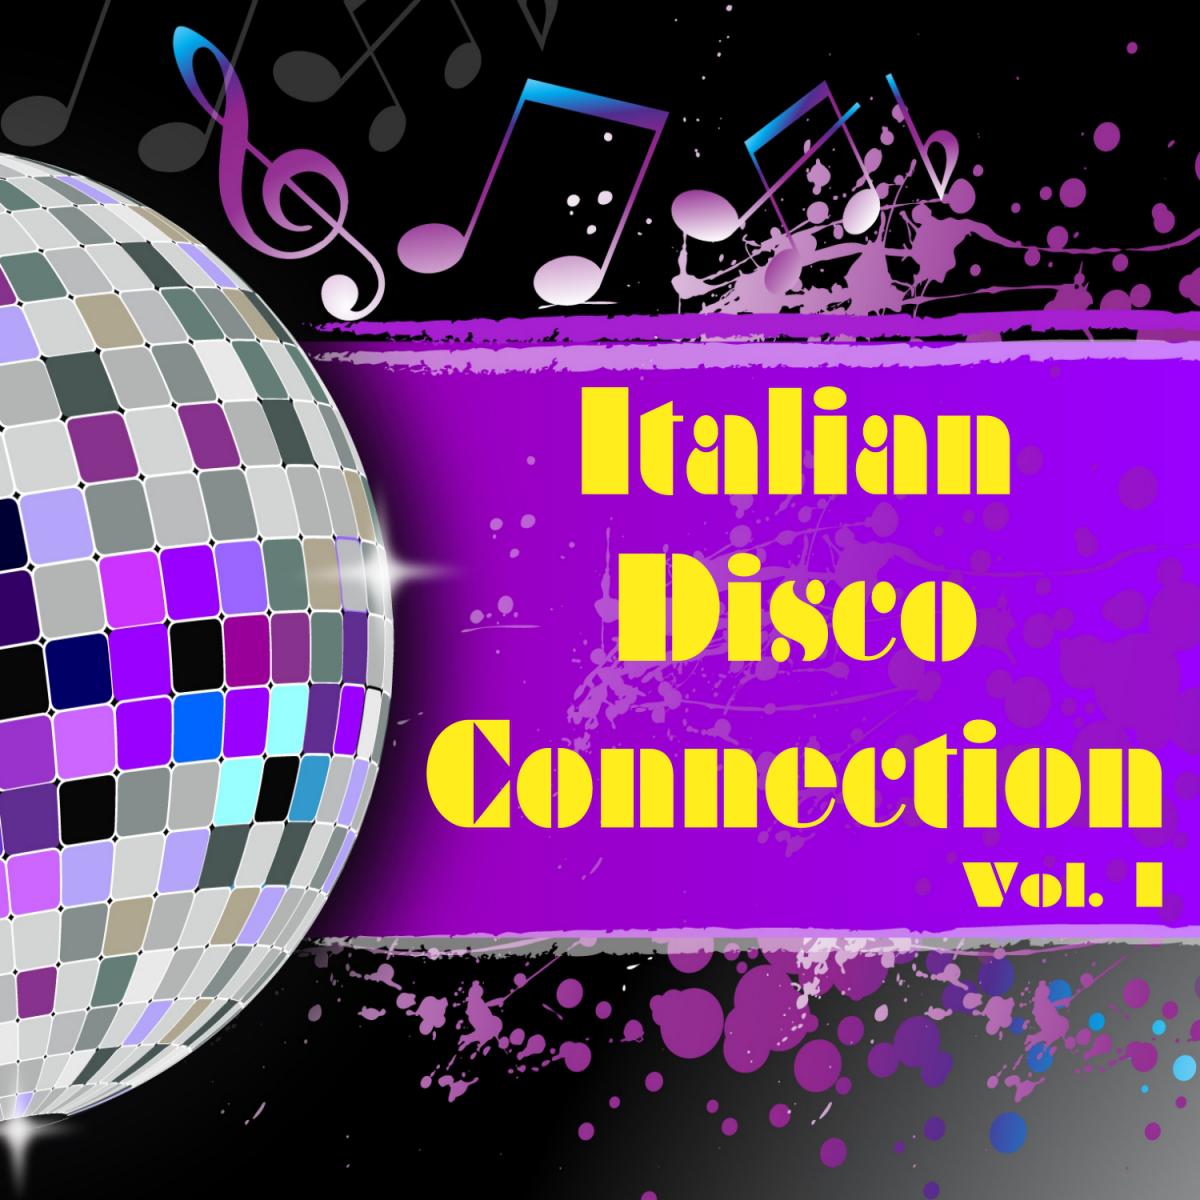 Italian Disco Connection Vol. 1